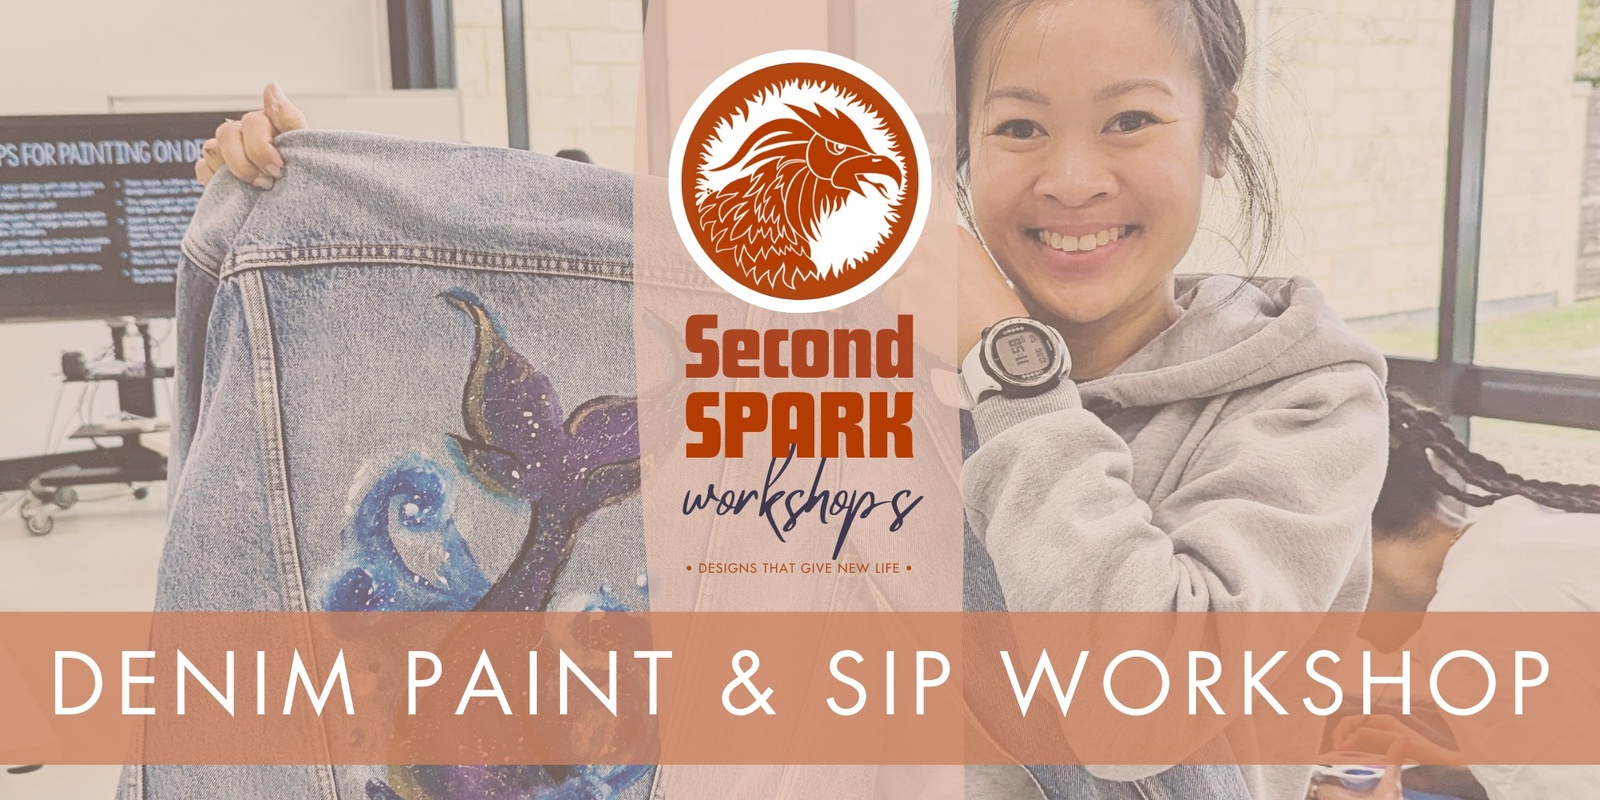 Savannah @ Second Spark Studios's banner